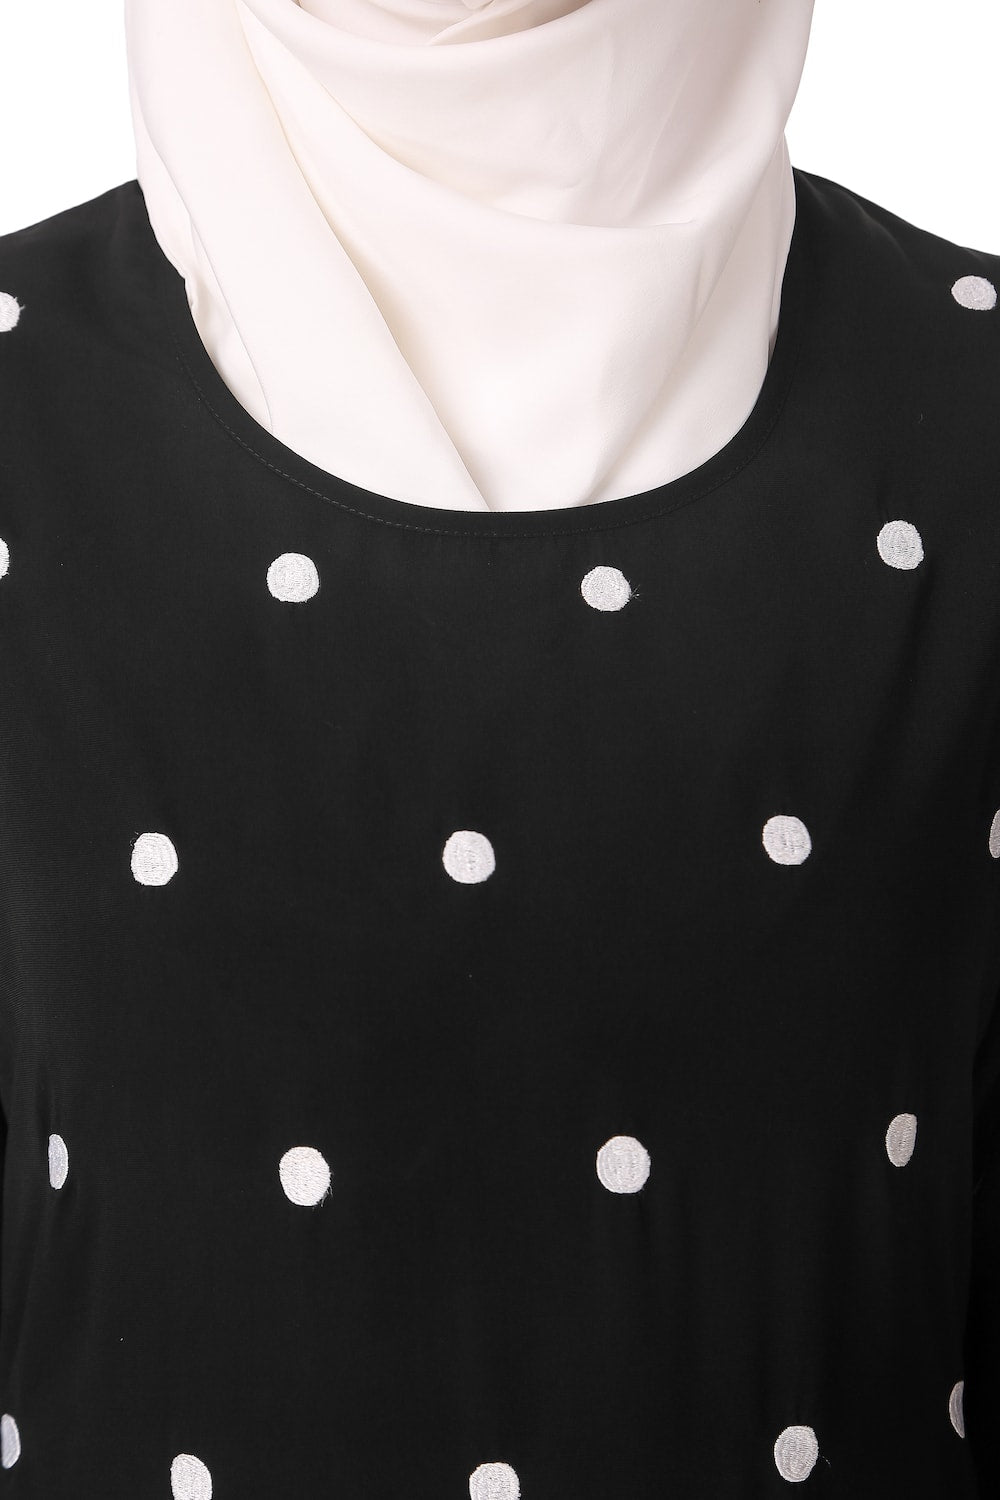 Embroidered Polka Dot A-Line Abaya Close Look